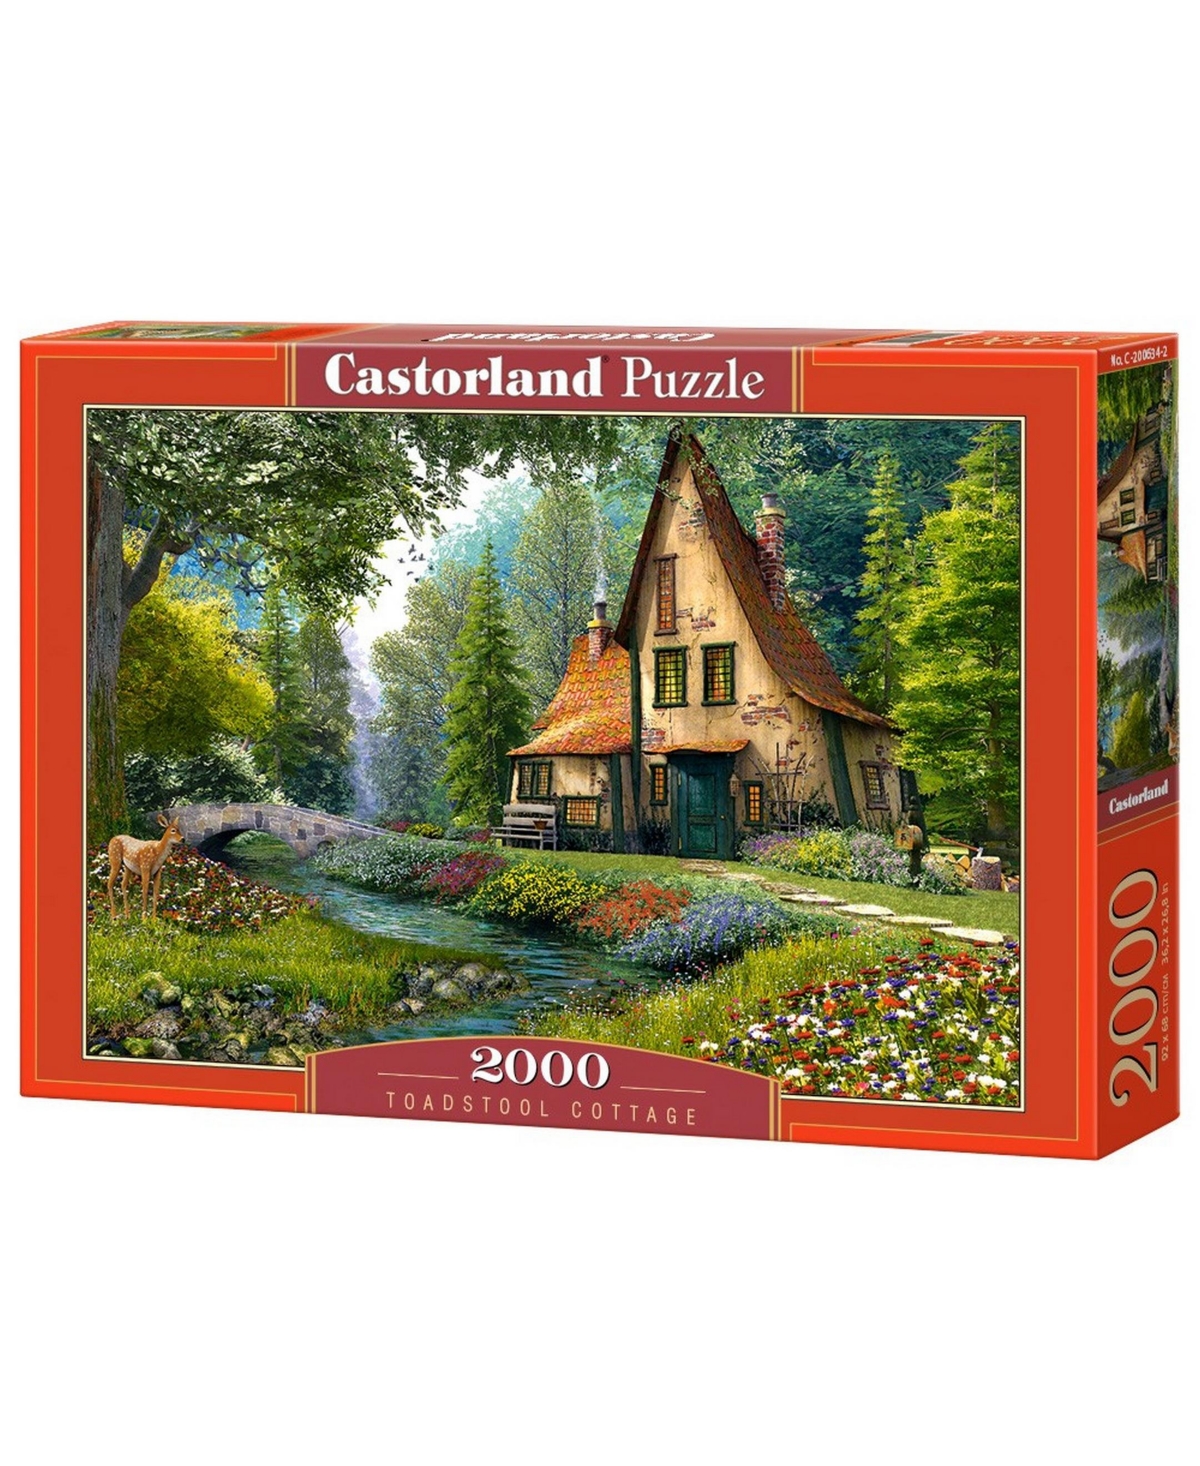 Castorland Toadstool Cottage Jigsaw Puzzle Set, 2000 Piece In Multicolor